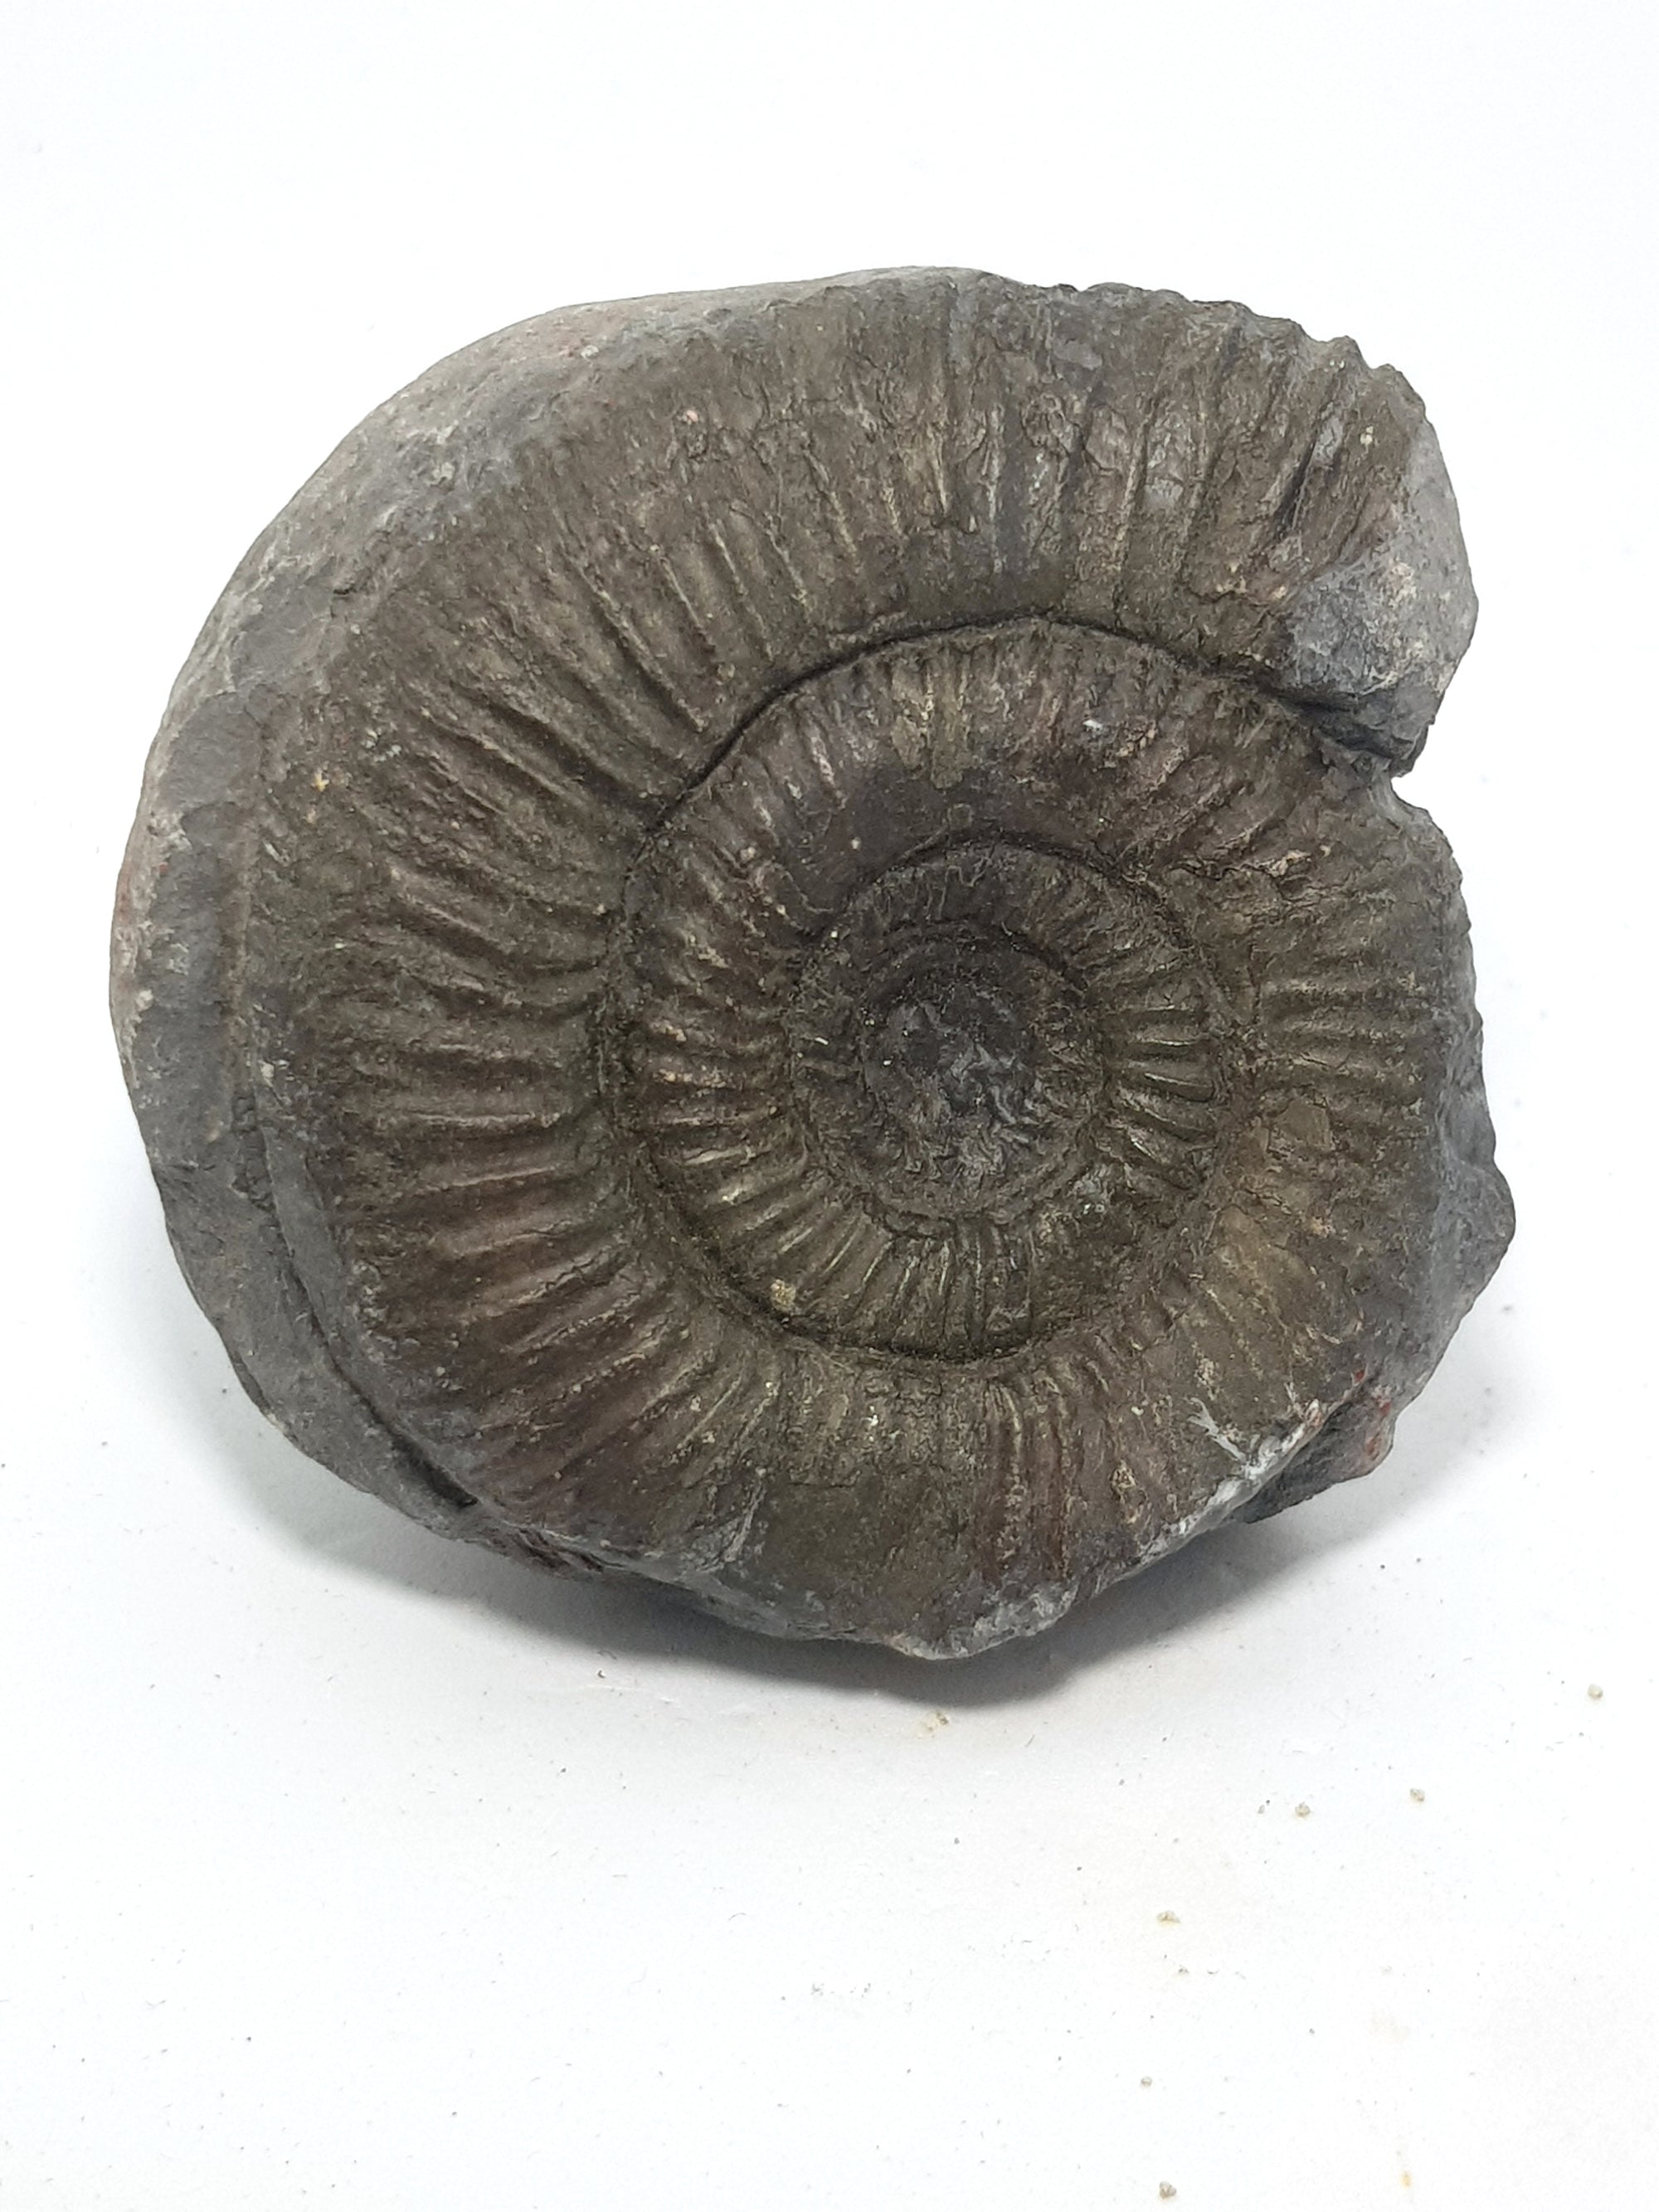 The Jurassic. 200 million - 146 million years ago. Image ammonites